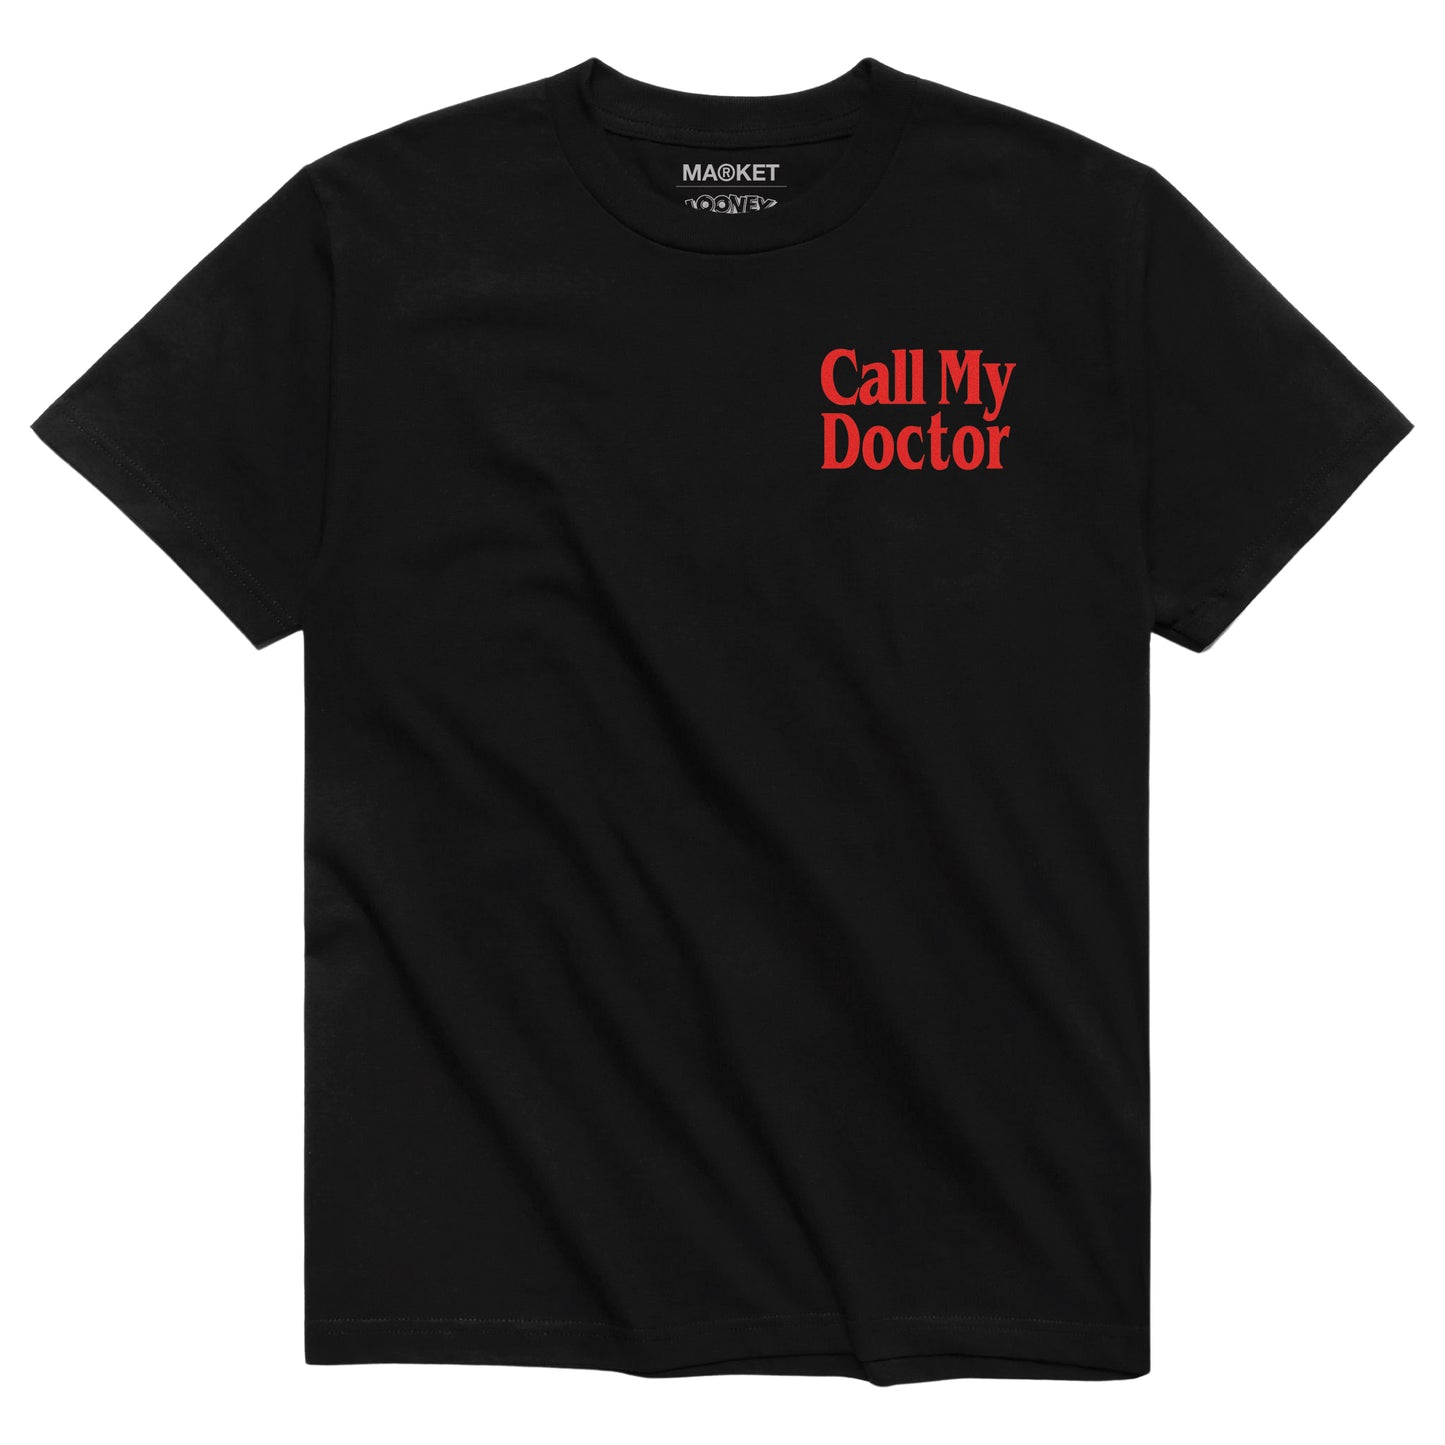 BUGS CALL MY DOCTOR T-SHIRT